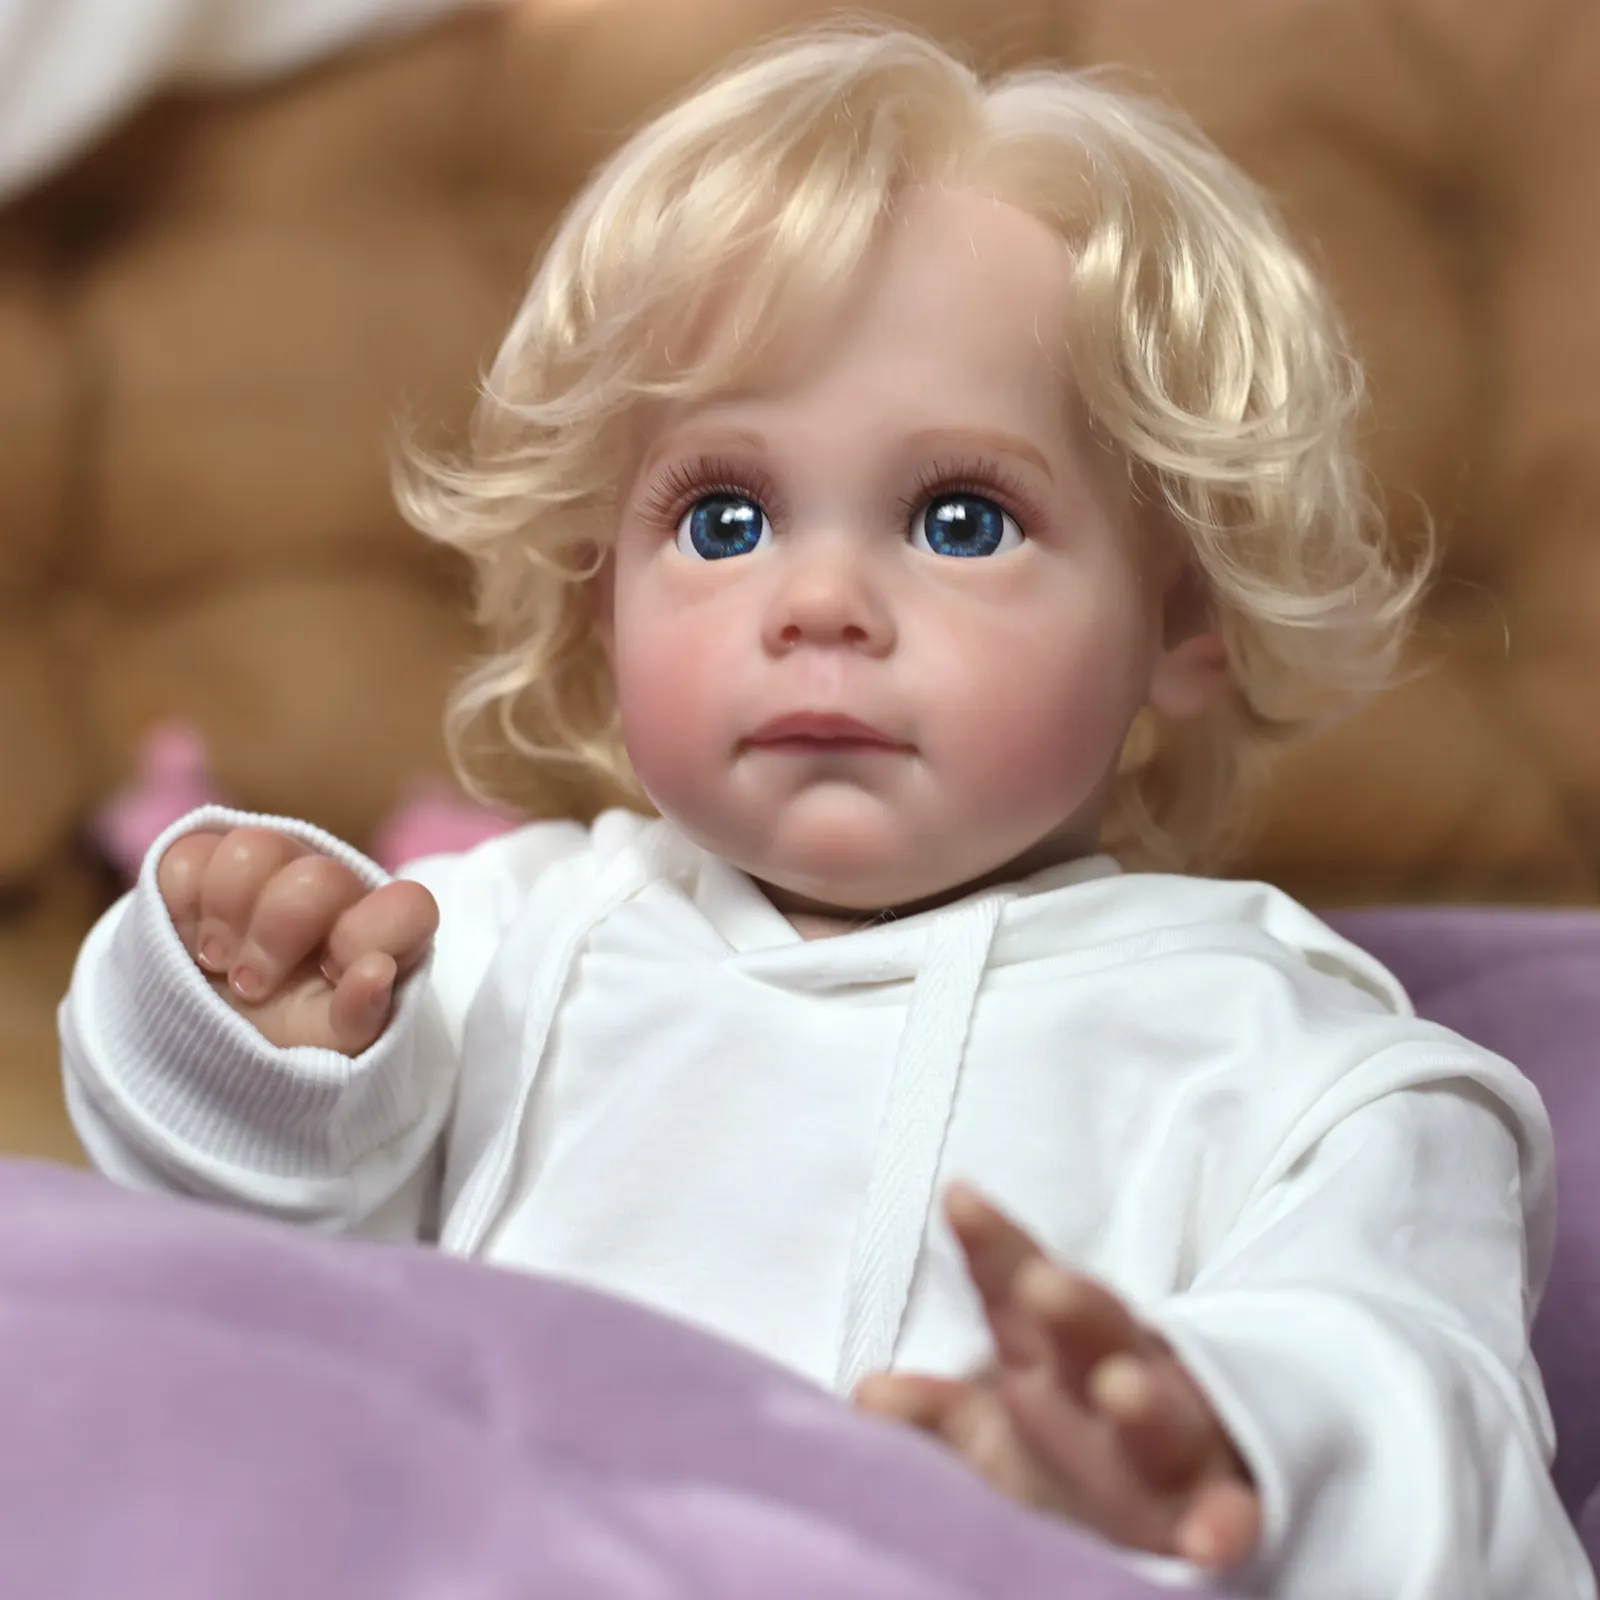 Lifereborn New Design Short Curly Blonde Hair 60cm Reborn Baby Dolls Cute Lifelike Bebe Reborn Dolls For Girls